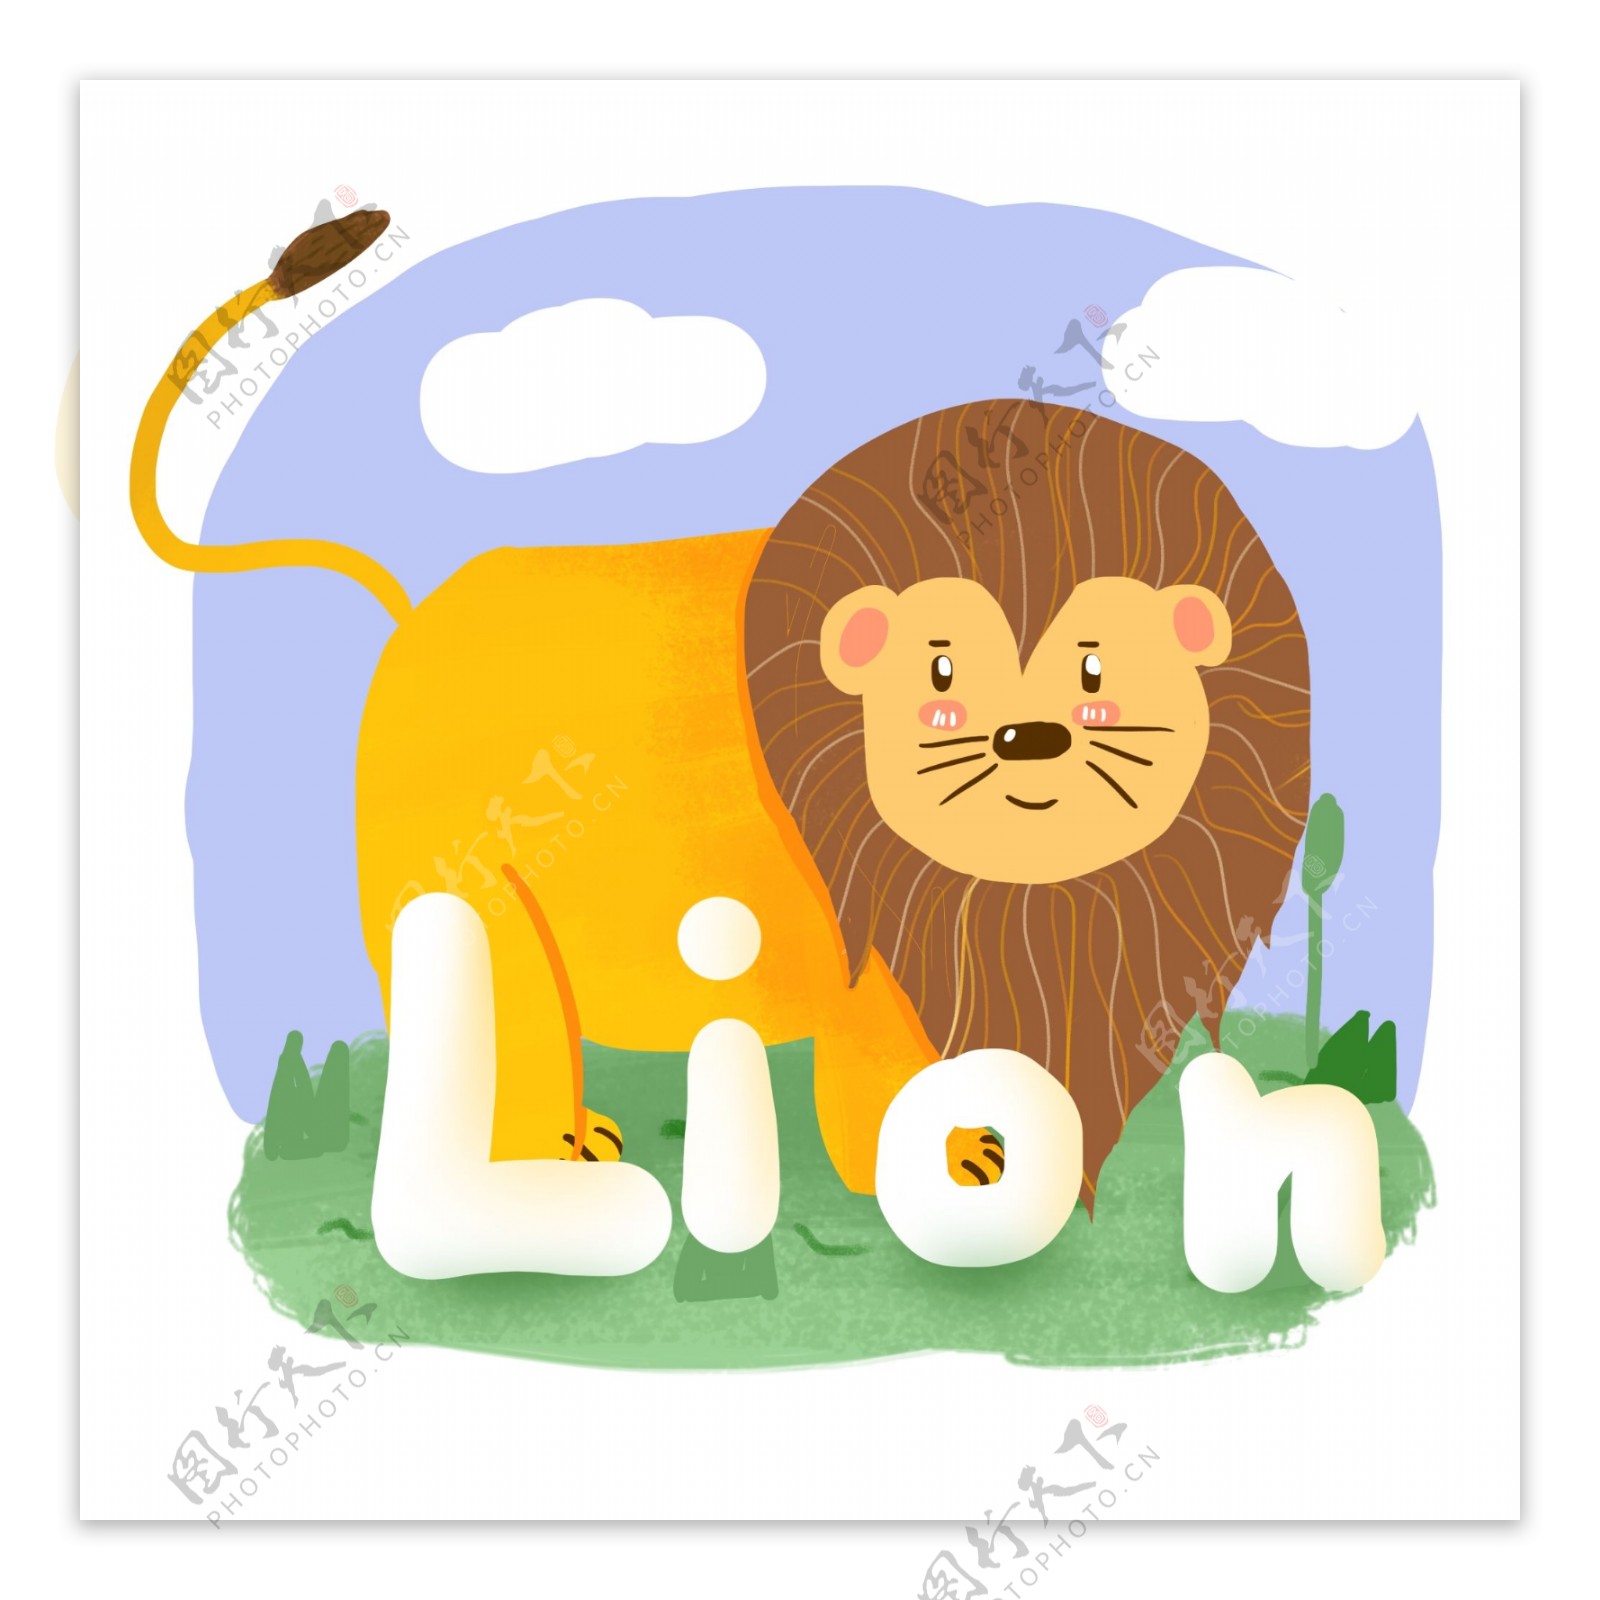 手绘风可爱动物狮子